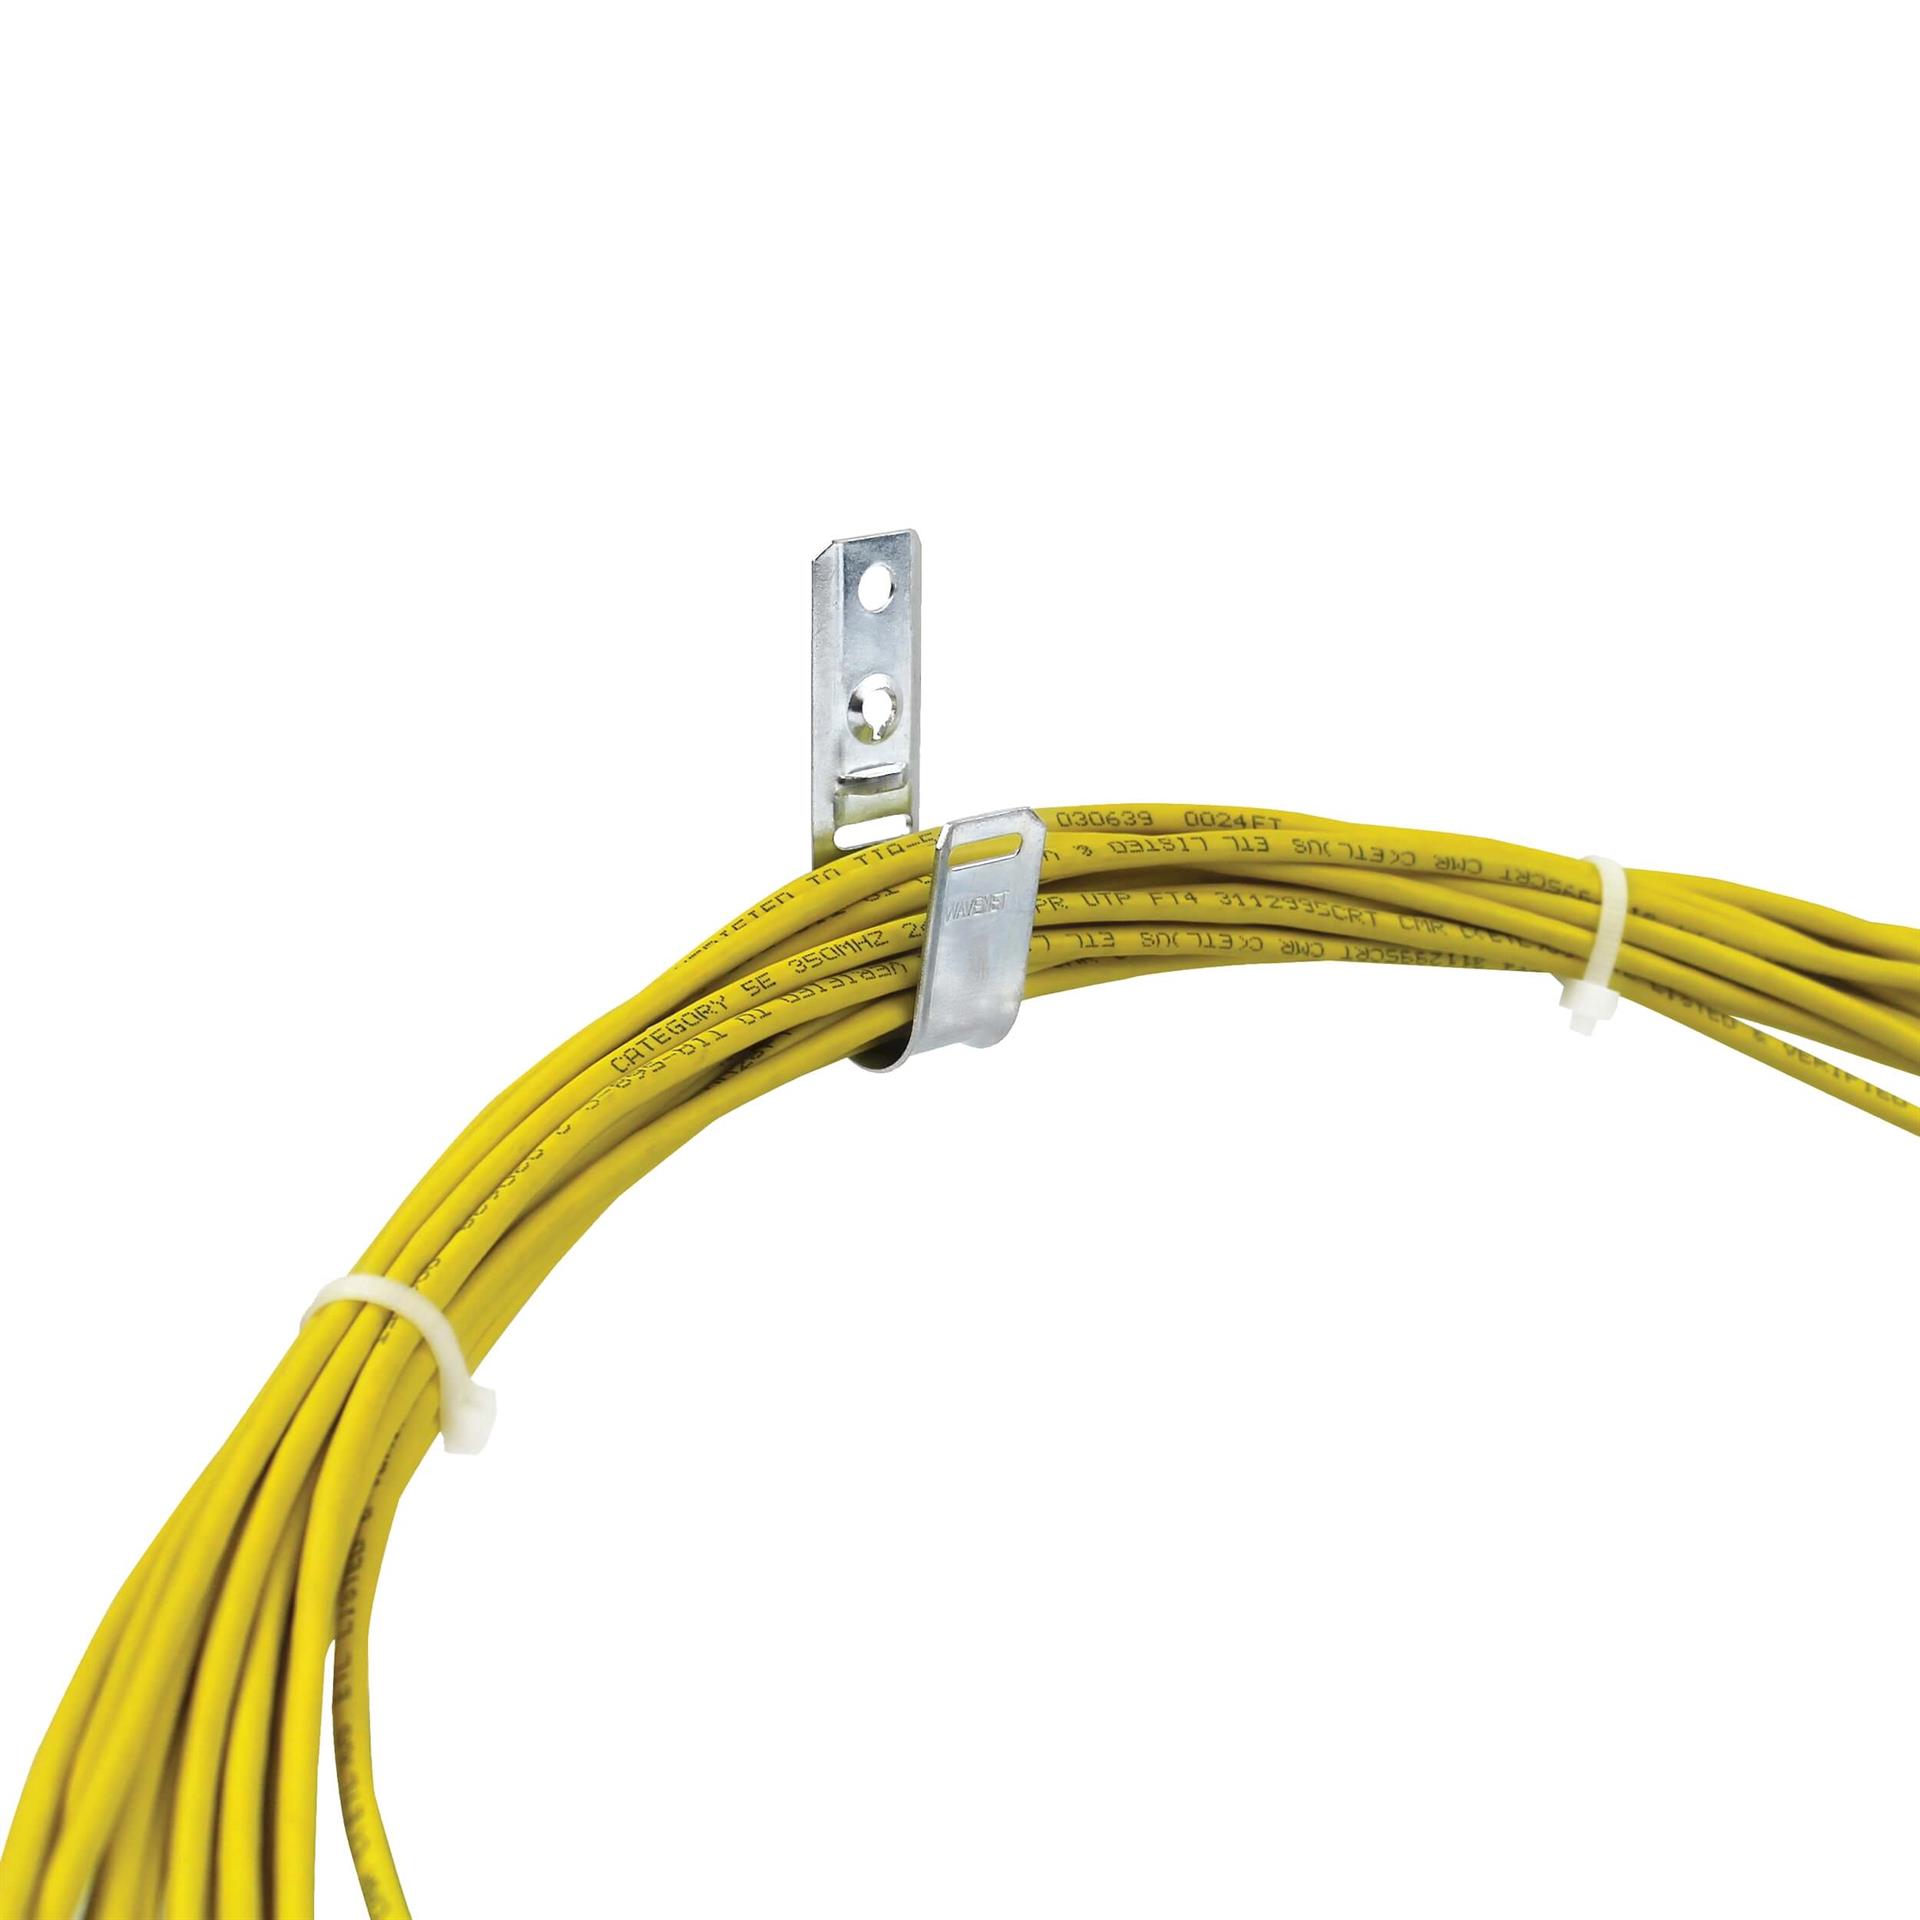 Wavenet 3062-n 0.75 in. J-Hook Cable Support Pack of 25